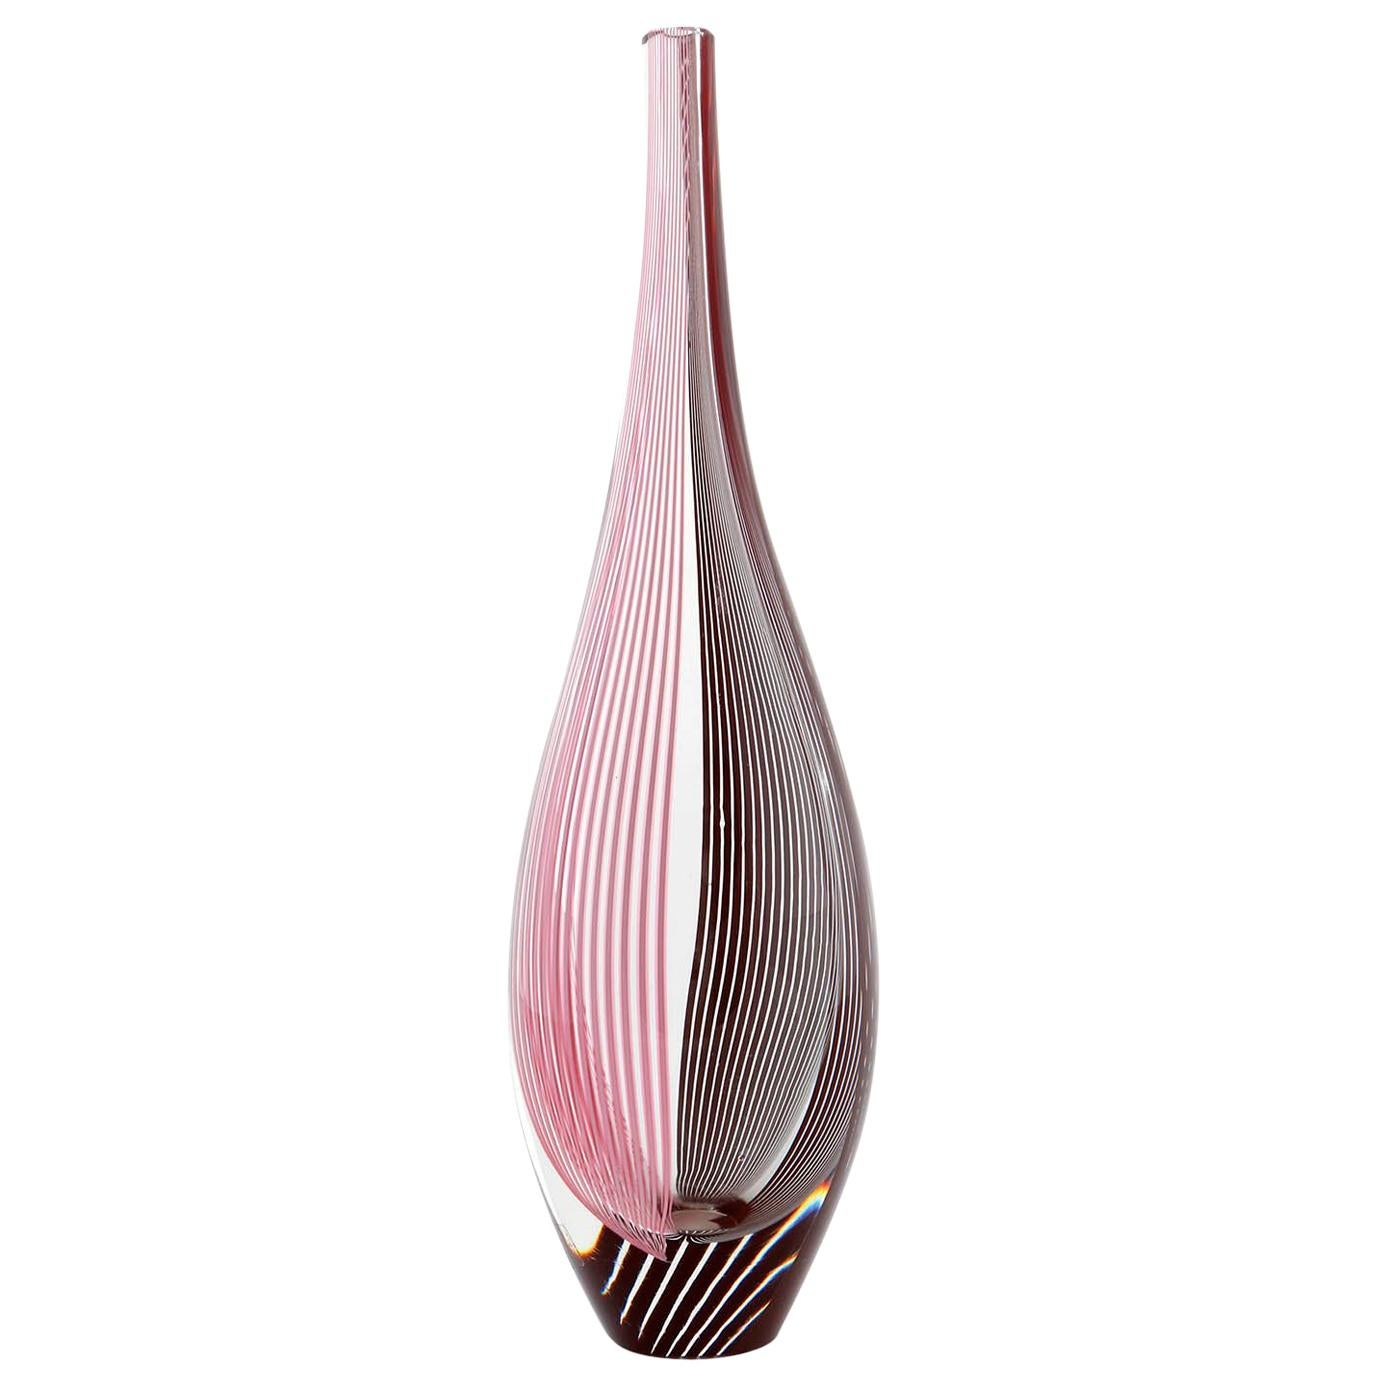 Glass Vase Lino Tagliapietra for Effetre International, Purple Pink, Italy, 1986